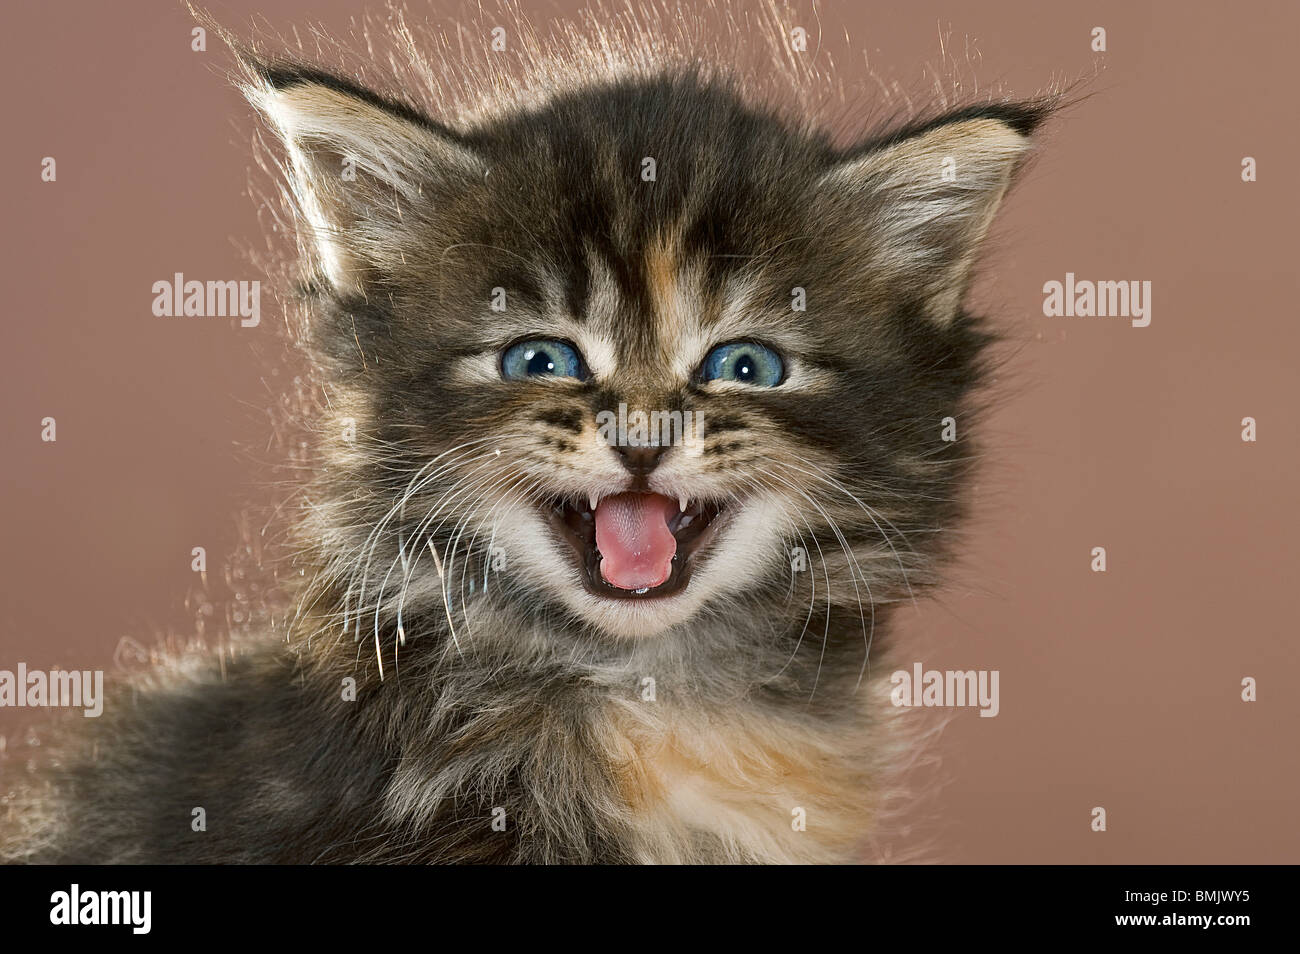 Maine Coon cat. Kitten meowing, portrait Stock Photo